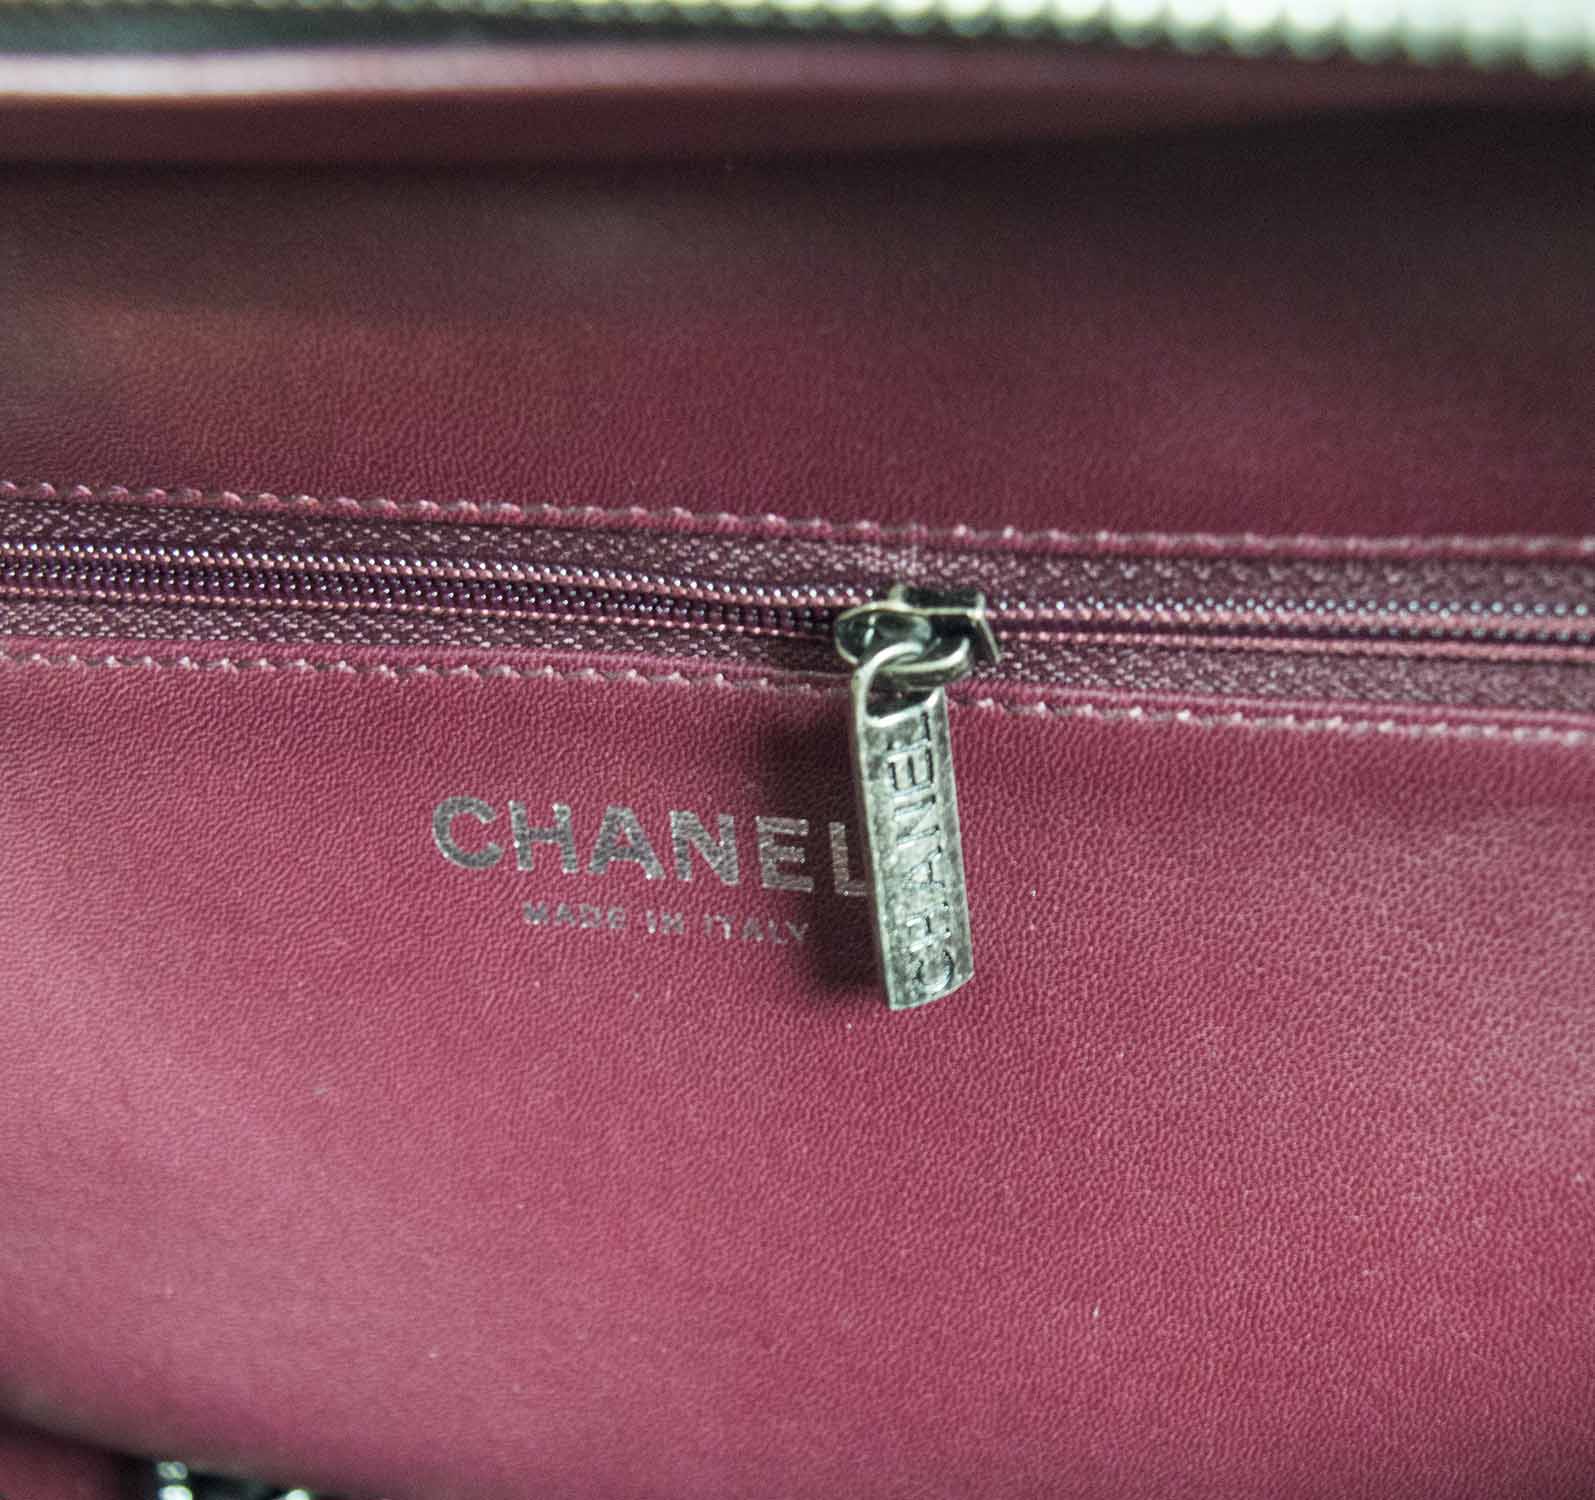 chanel tag inside bag